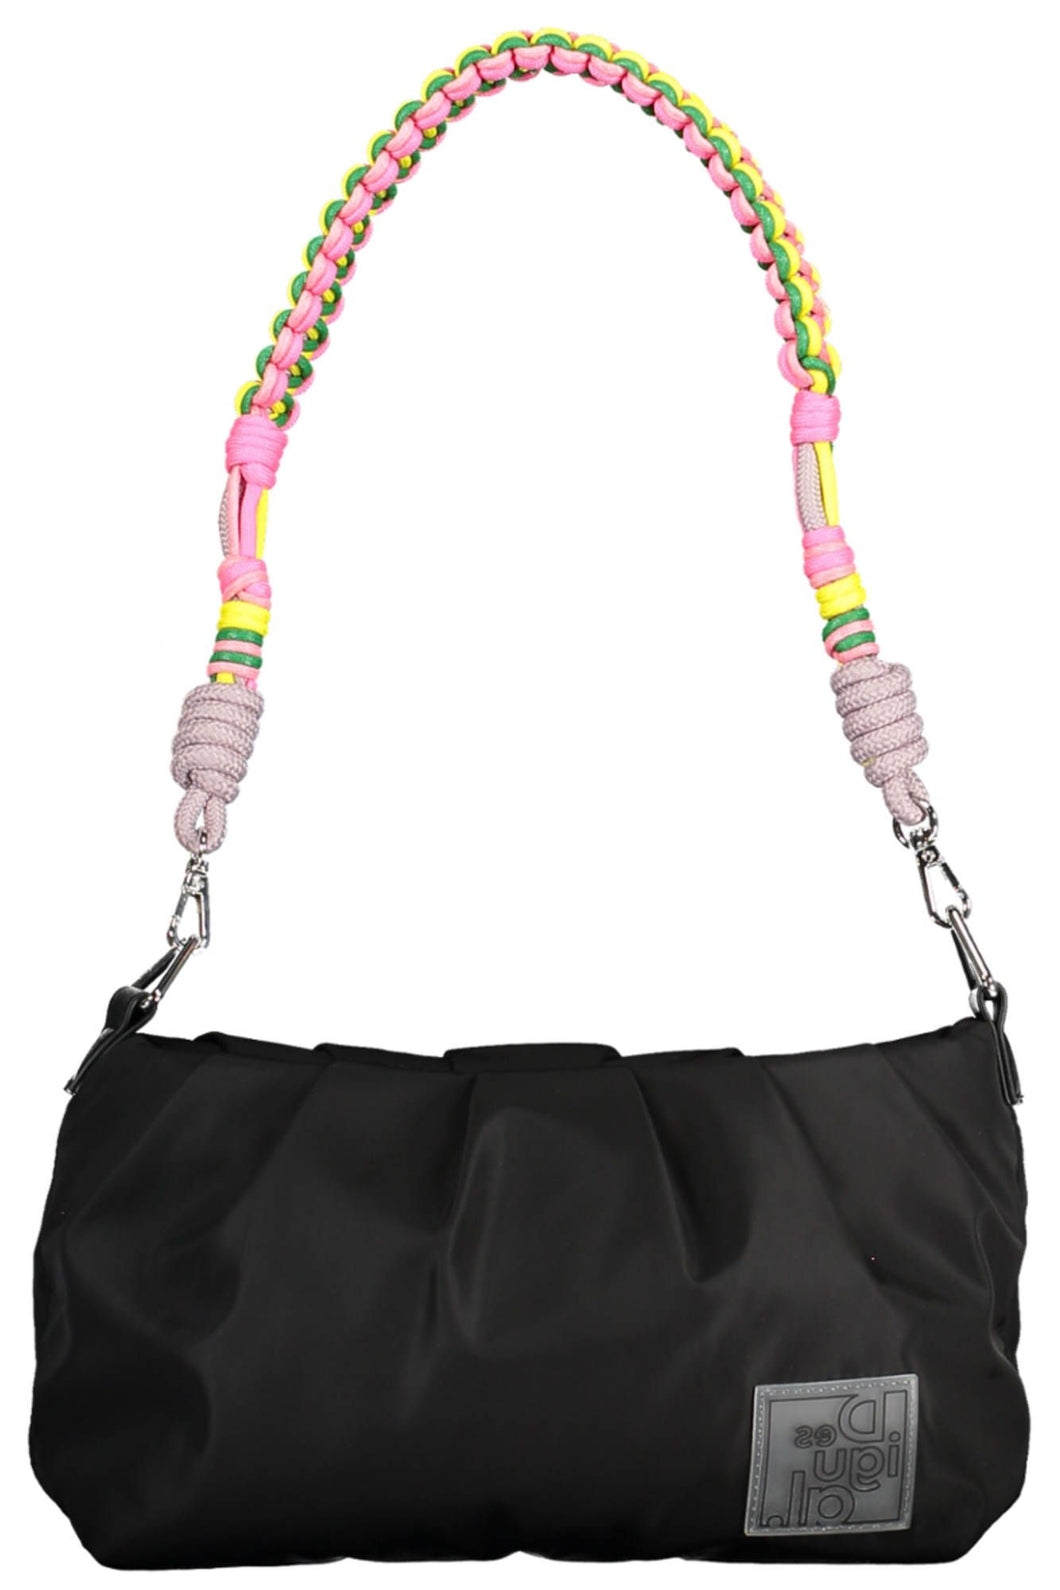 Desigual Black Polyester Handbag